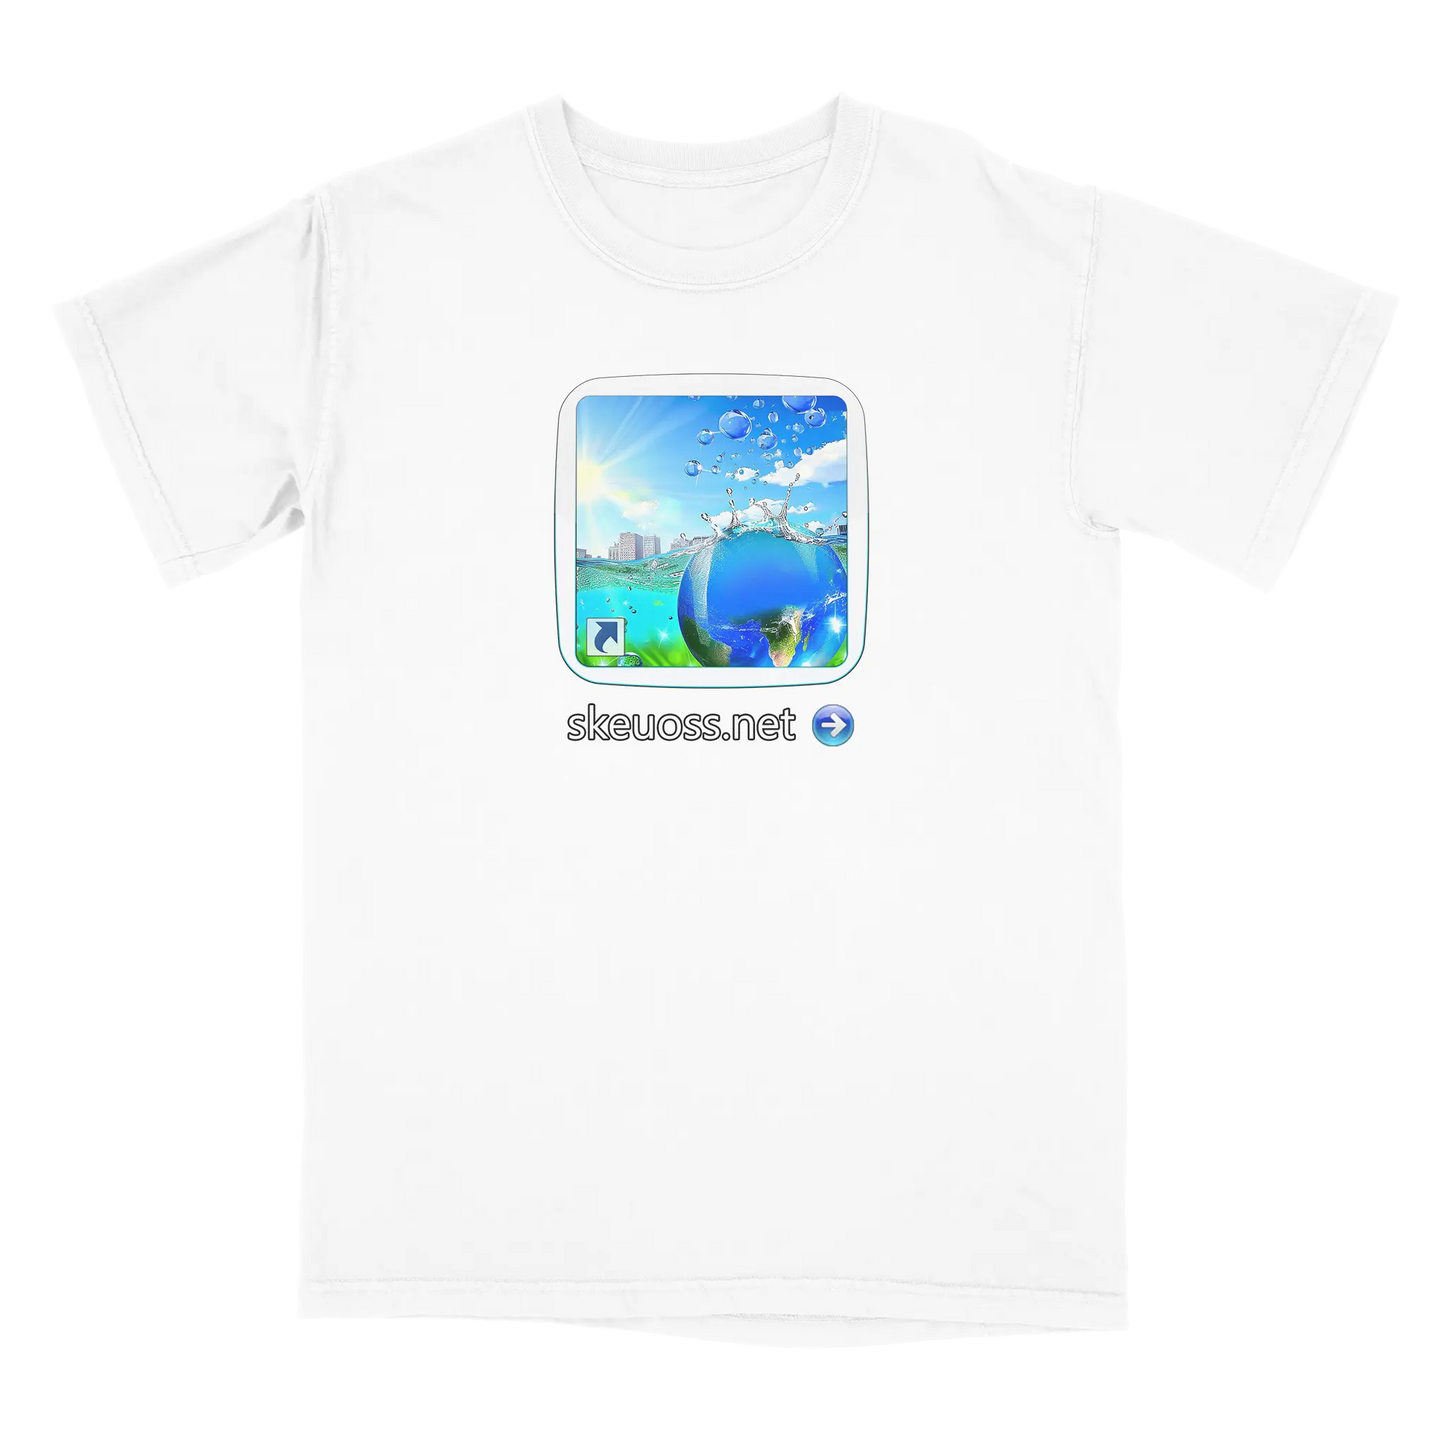 Frutiger Aero T-shirt - User Login Collection - User 268